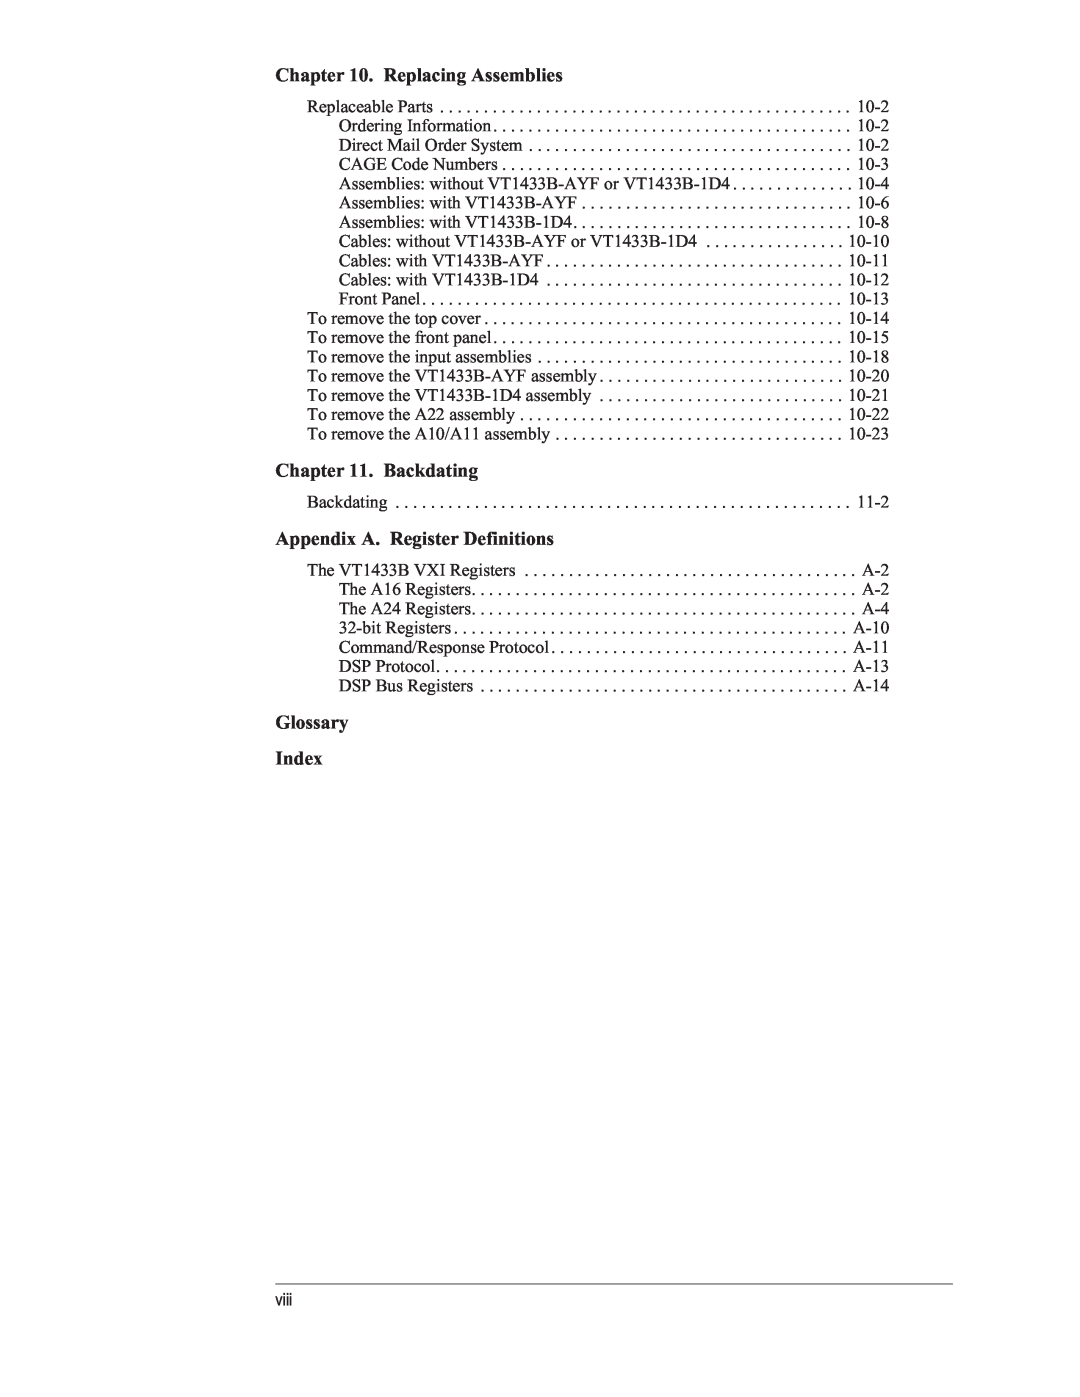 VXI VT1433B manual Replacing Assemblies, Backdating, Appendix A. Register Definitions, Glossary Index 